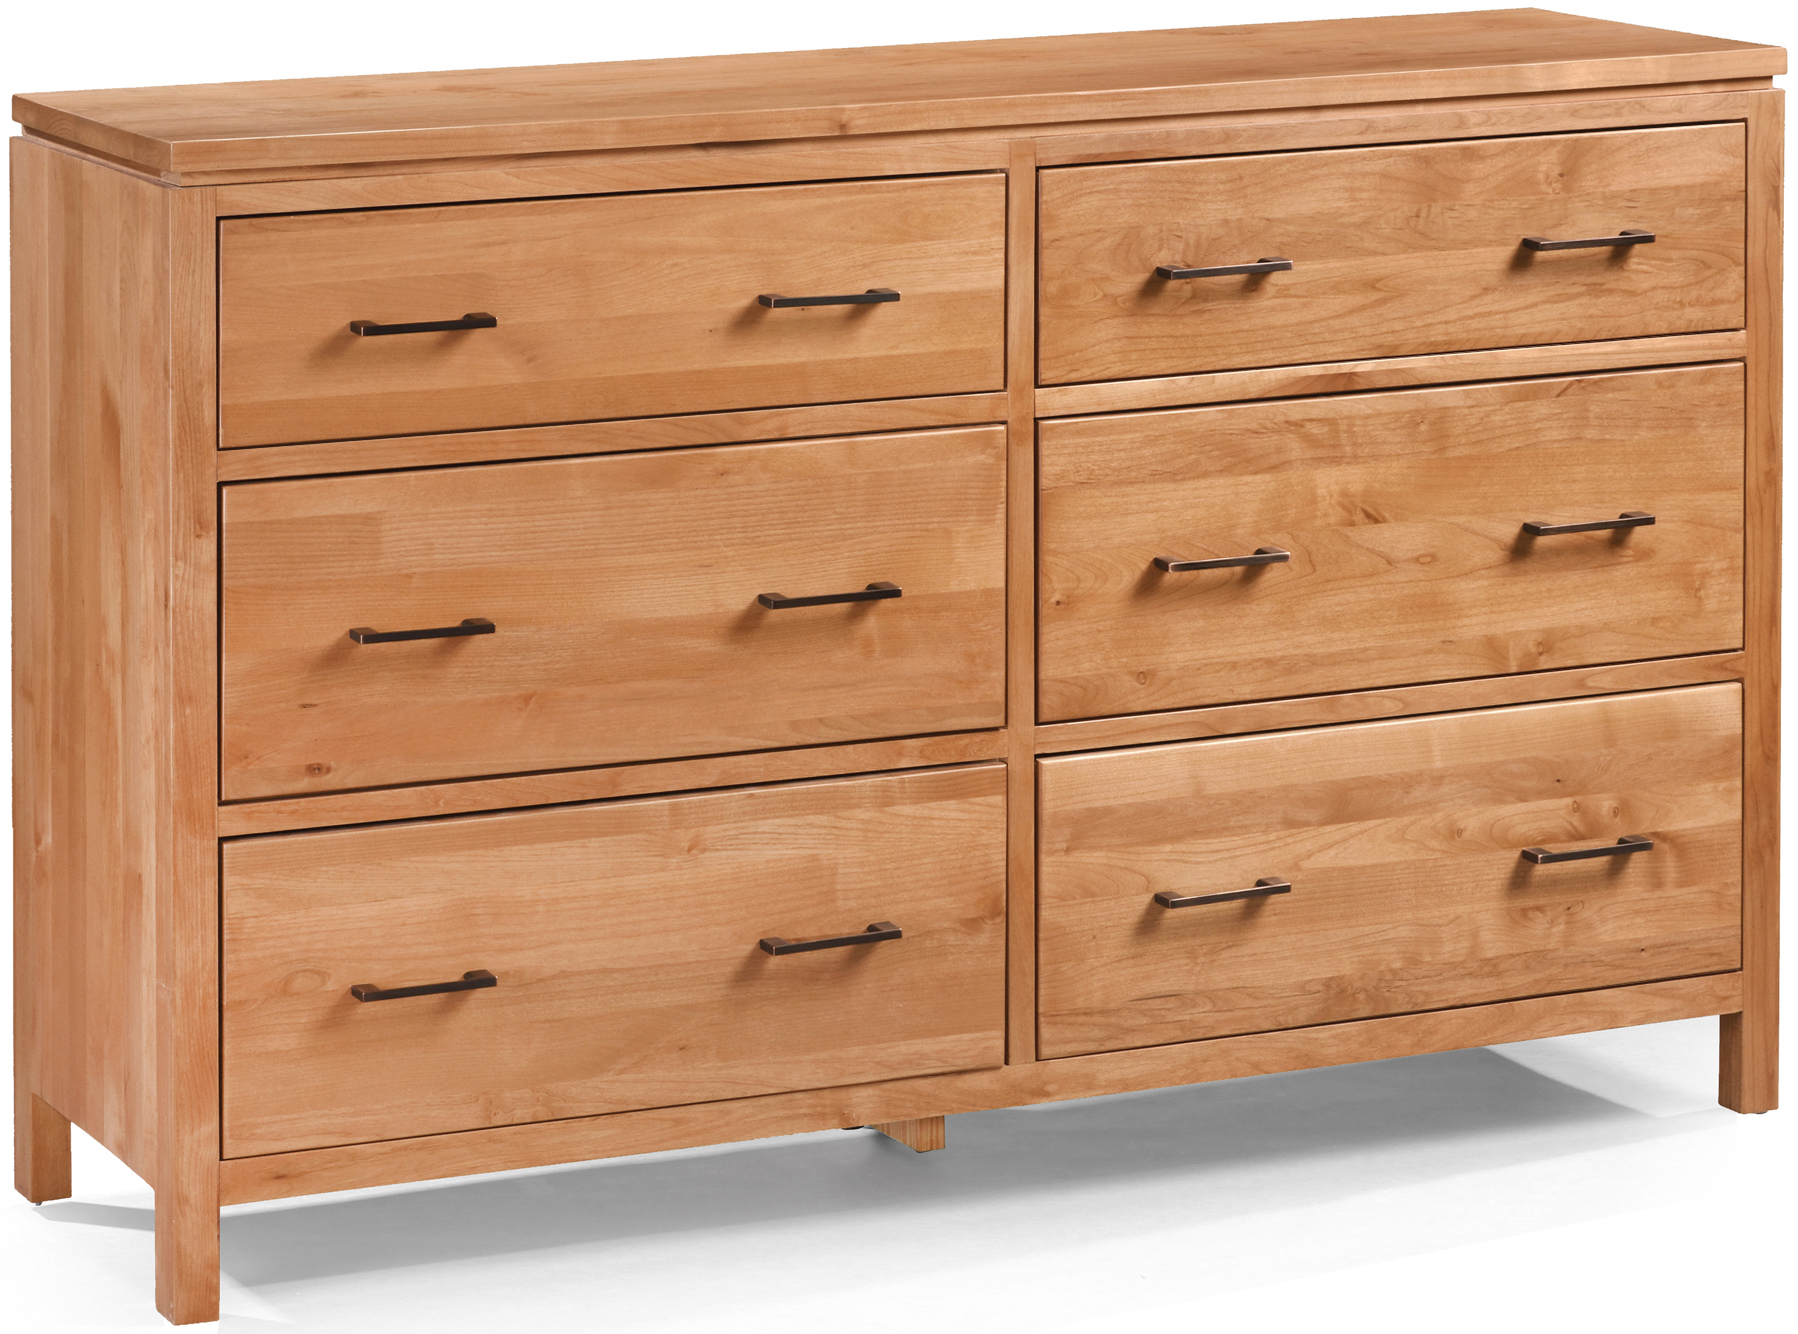 Archbold Furniture Company 2 West Dresser - Best